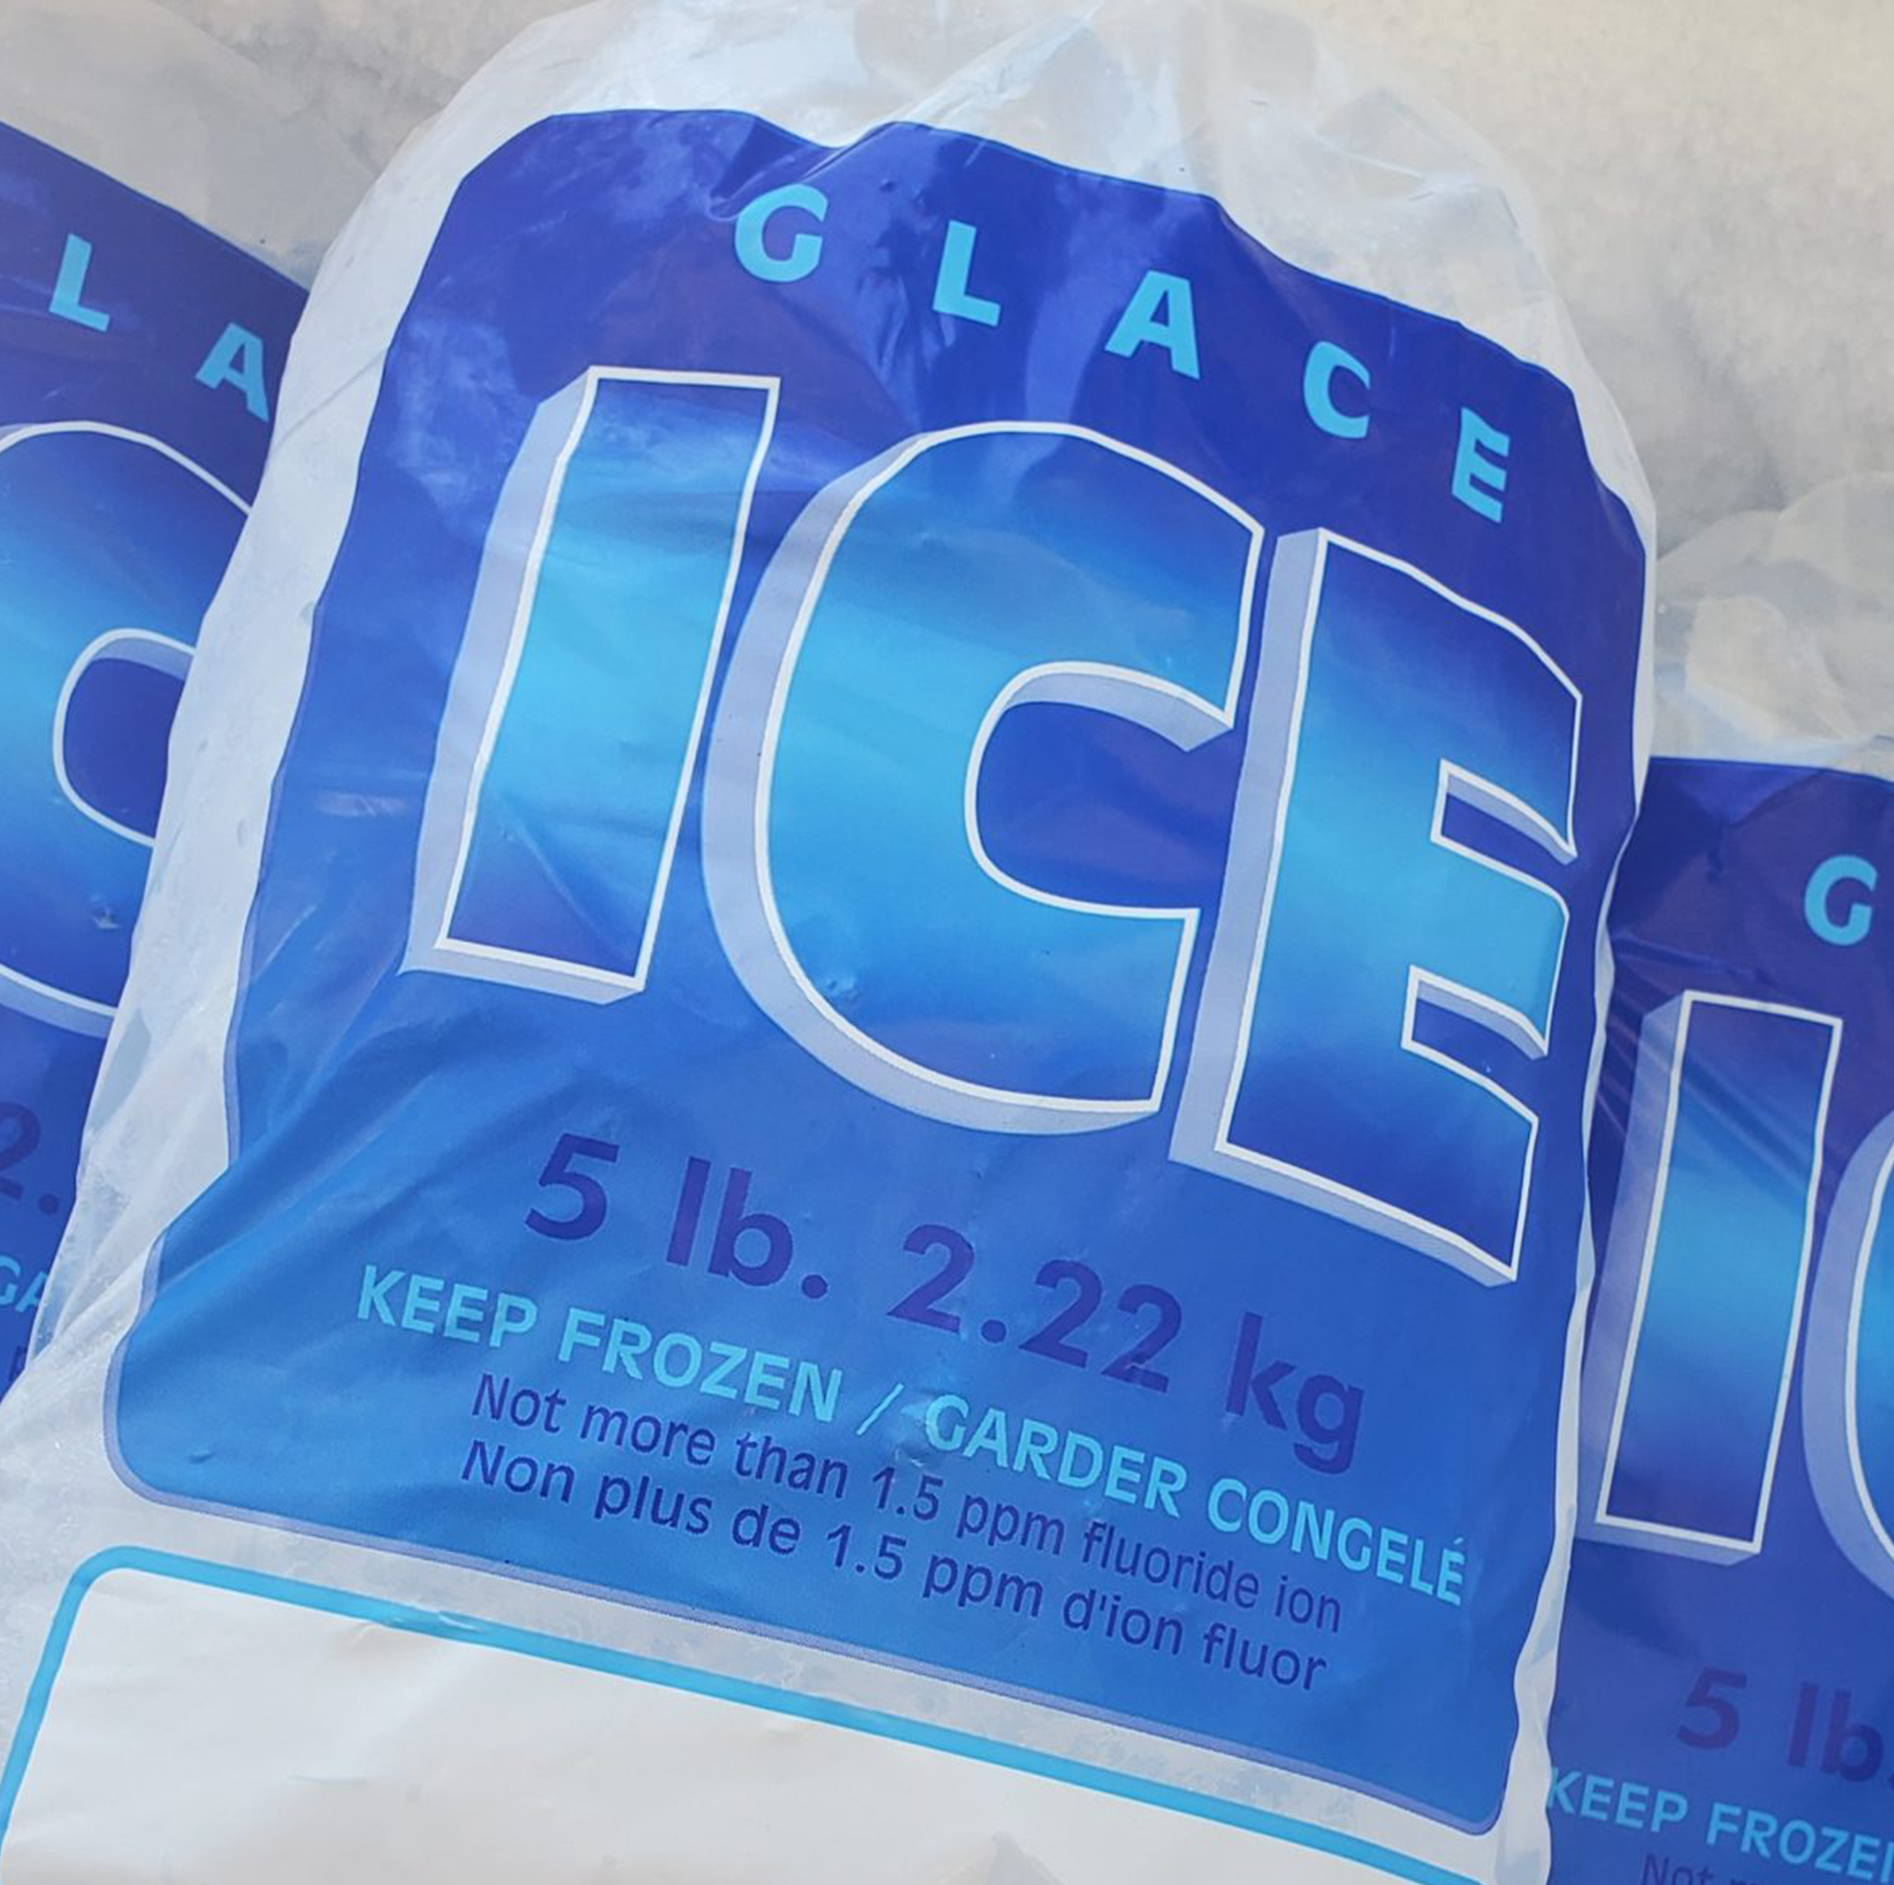 5lb. Bagged Ice